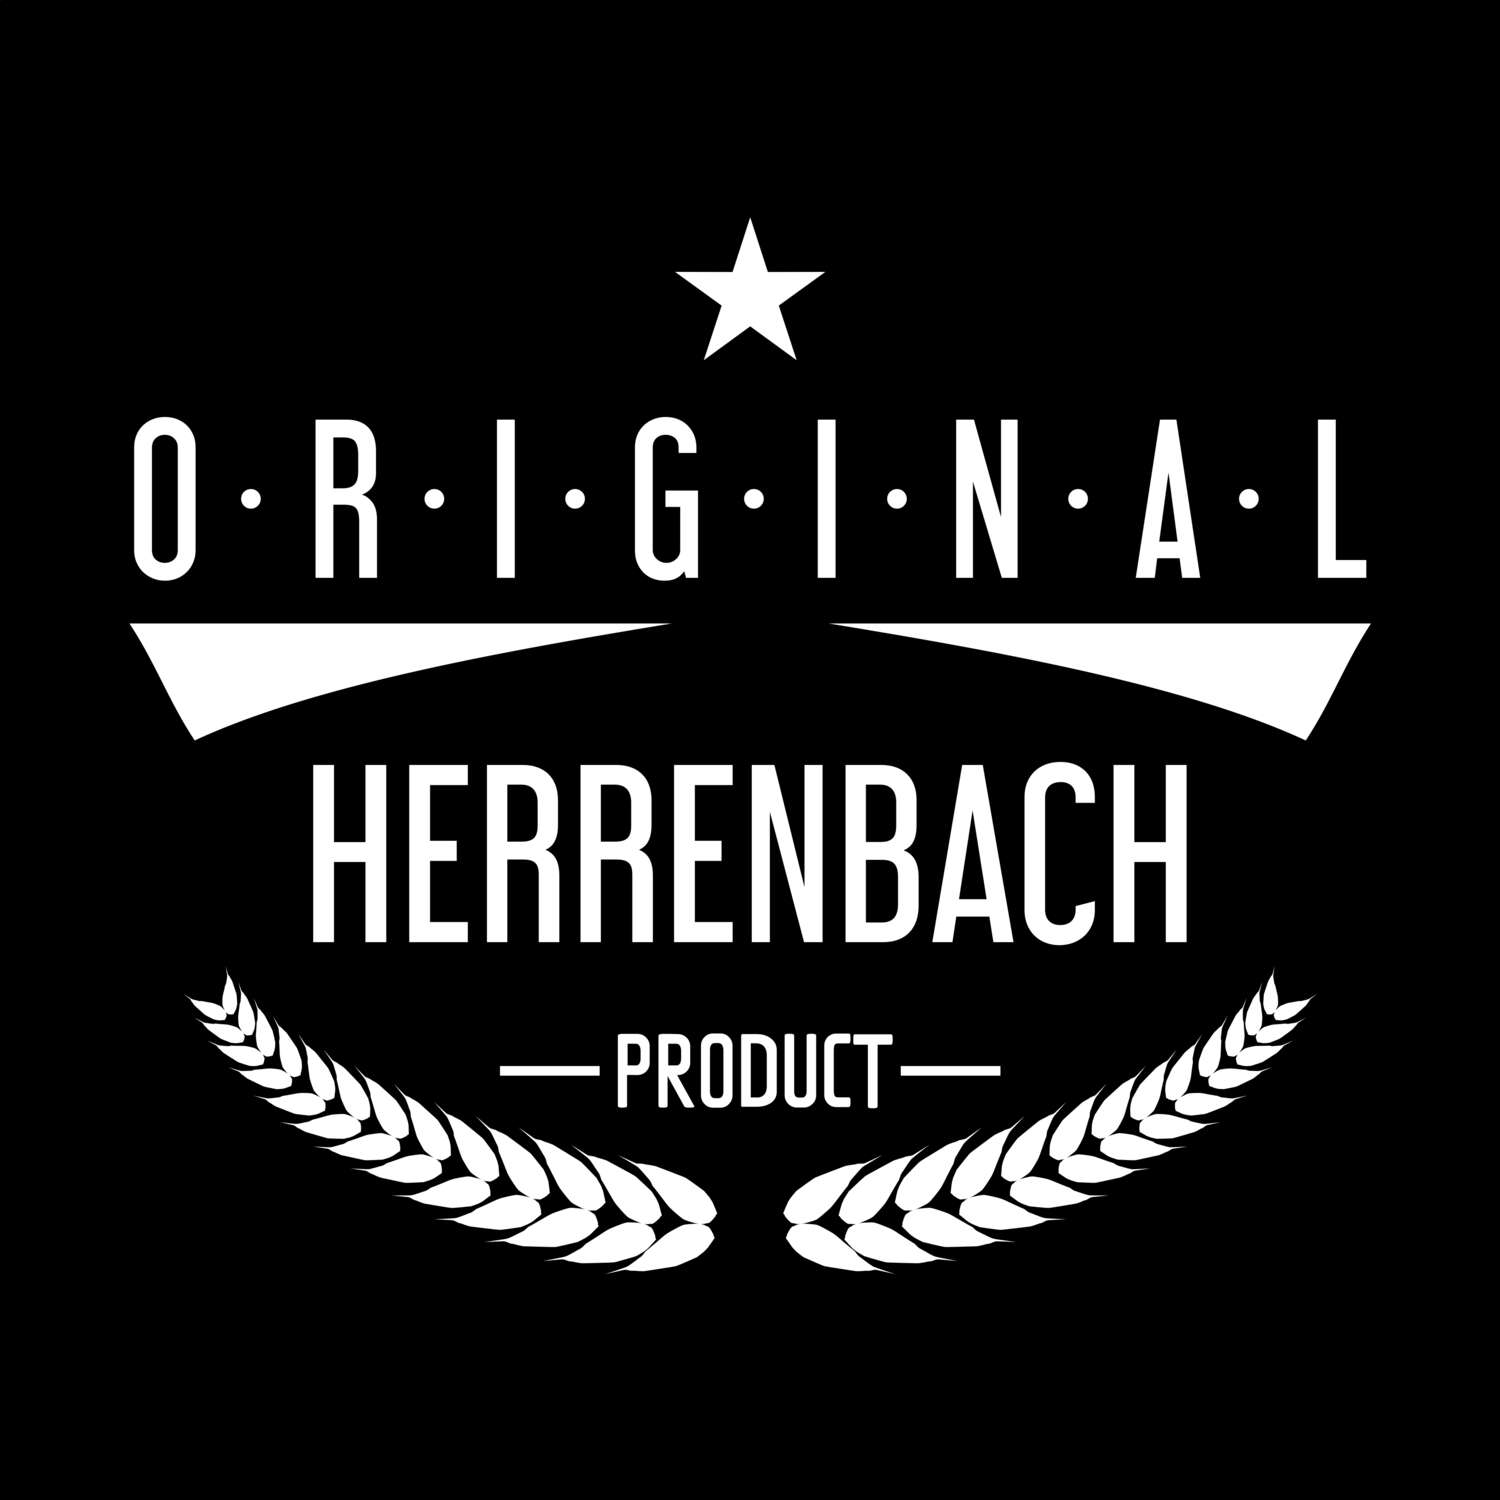 Herrenbach T-Shirt »Original Product«